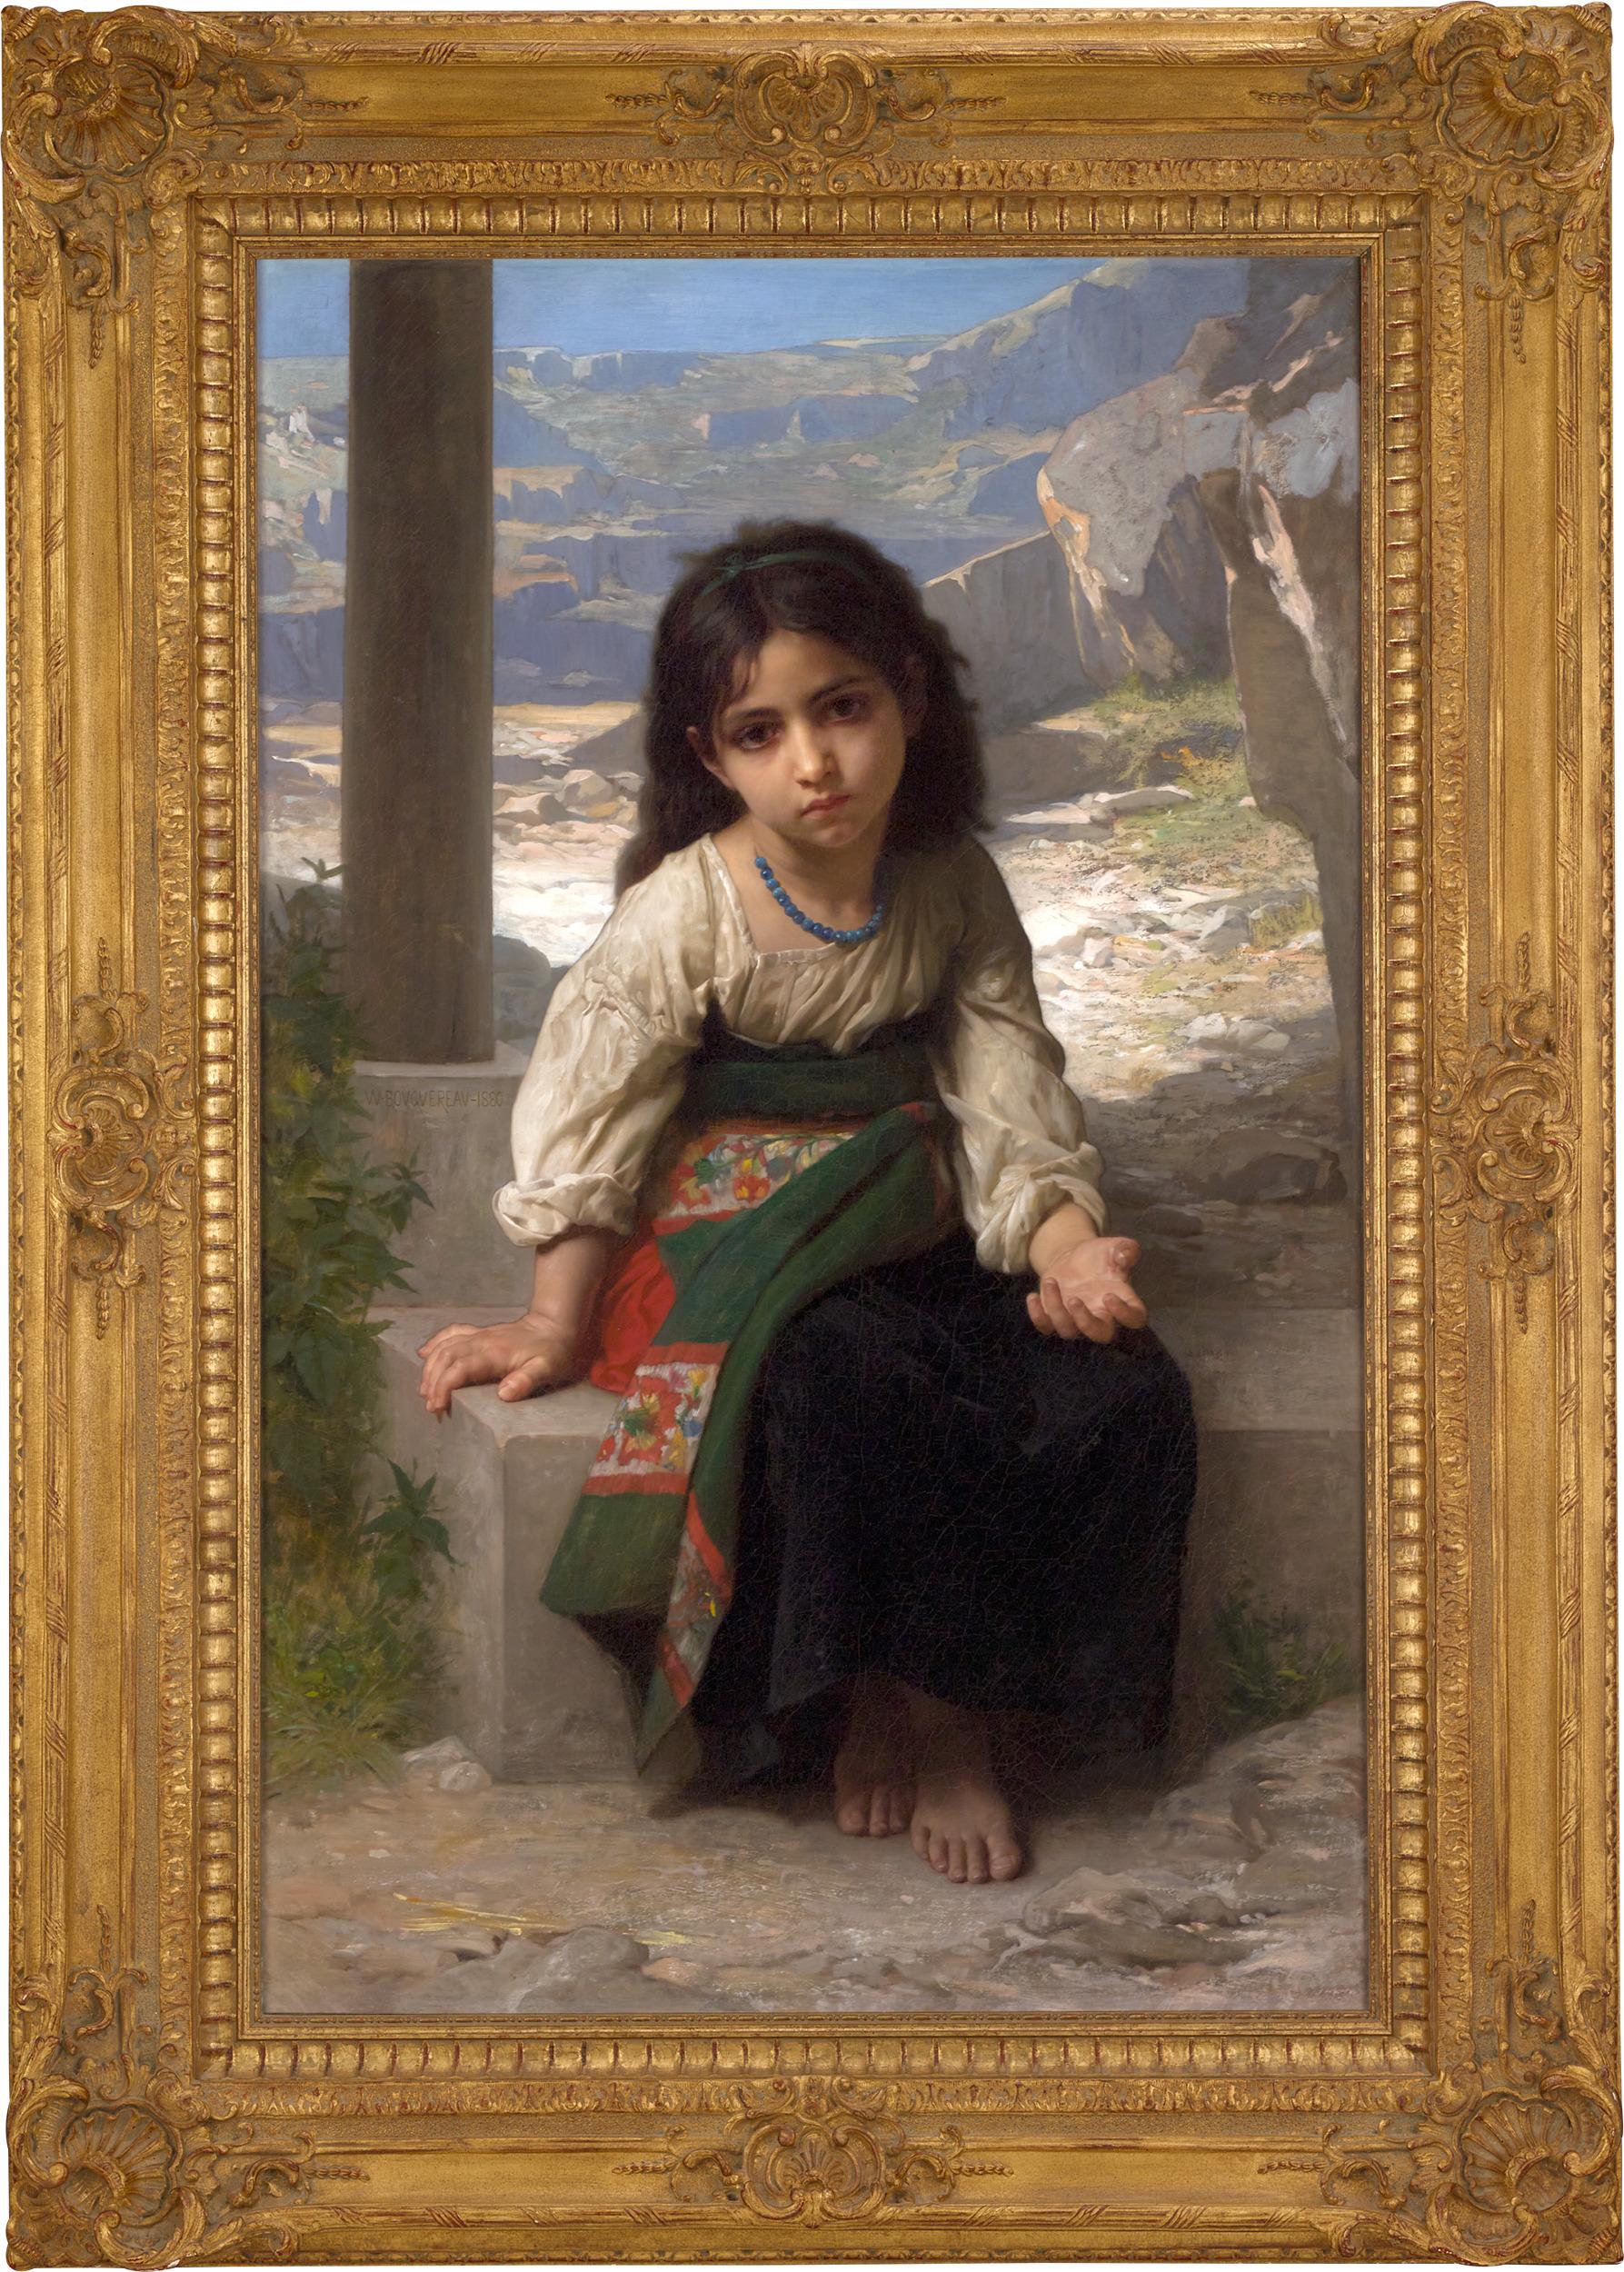 Petite Mendiante By William-Adolphe Bouguereau - Academic Painting by William Bouguereau (1825-1905)